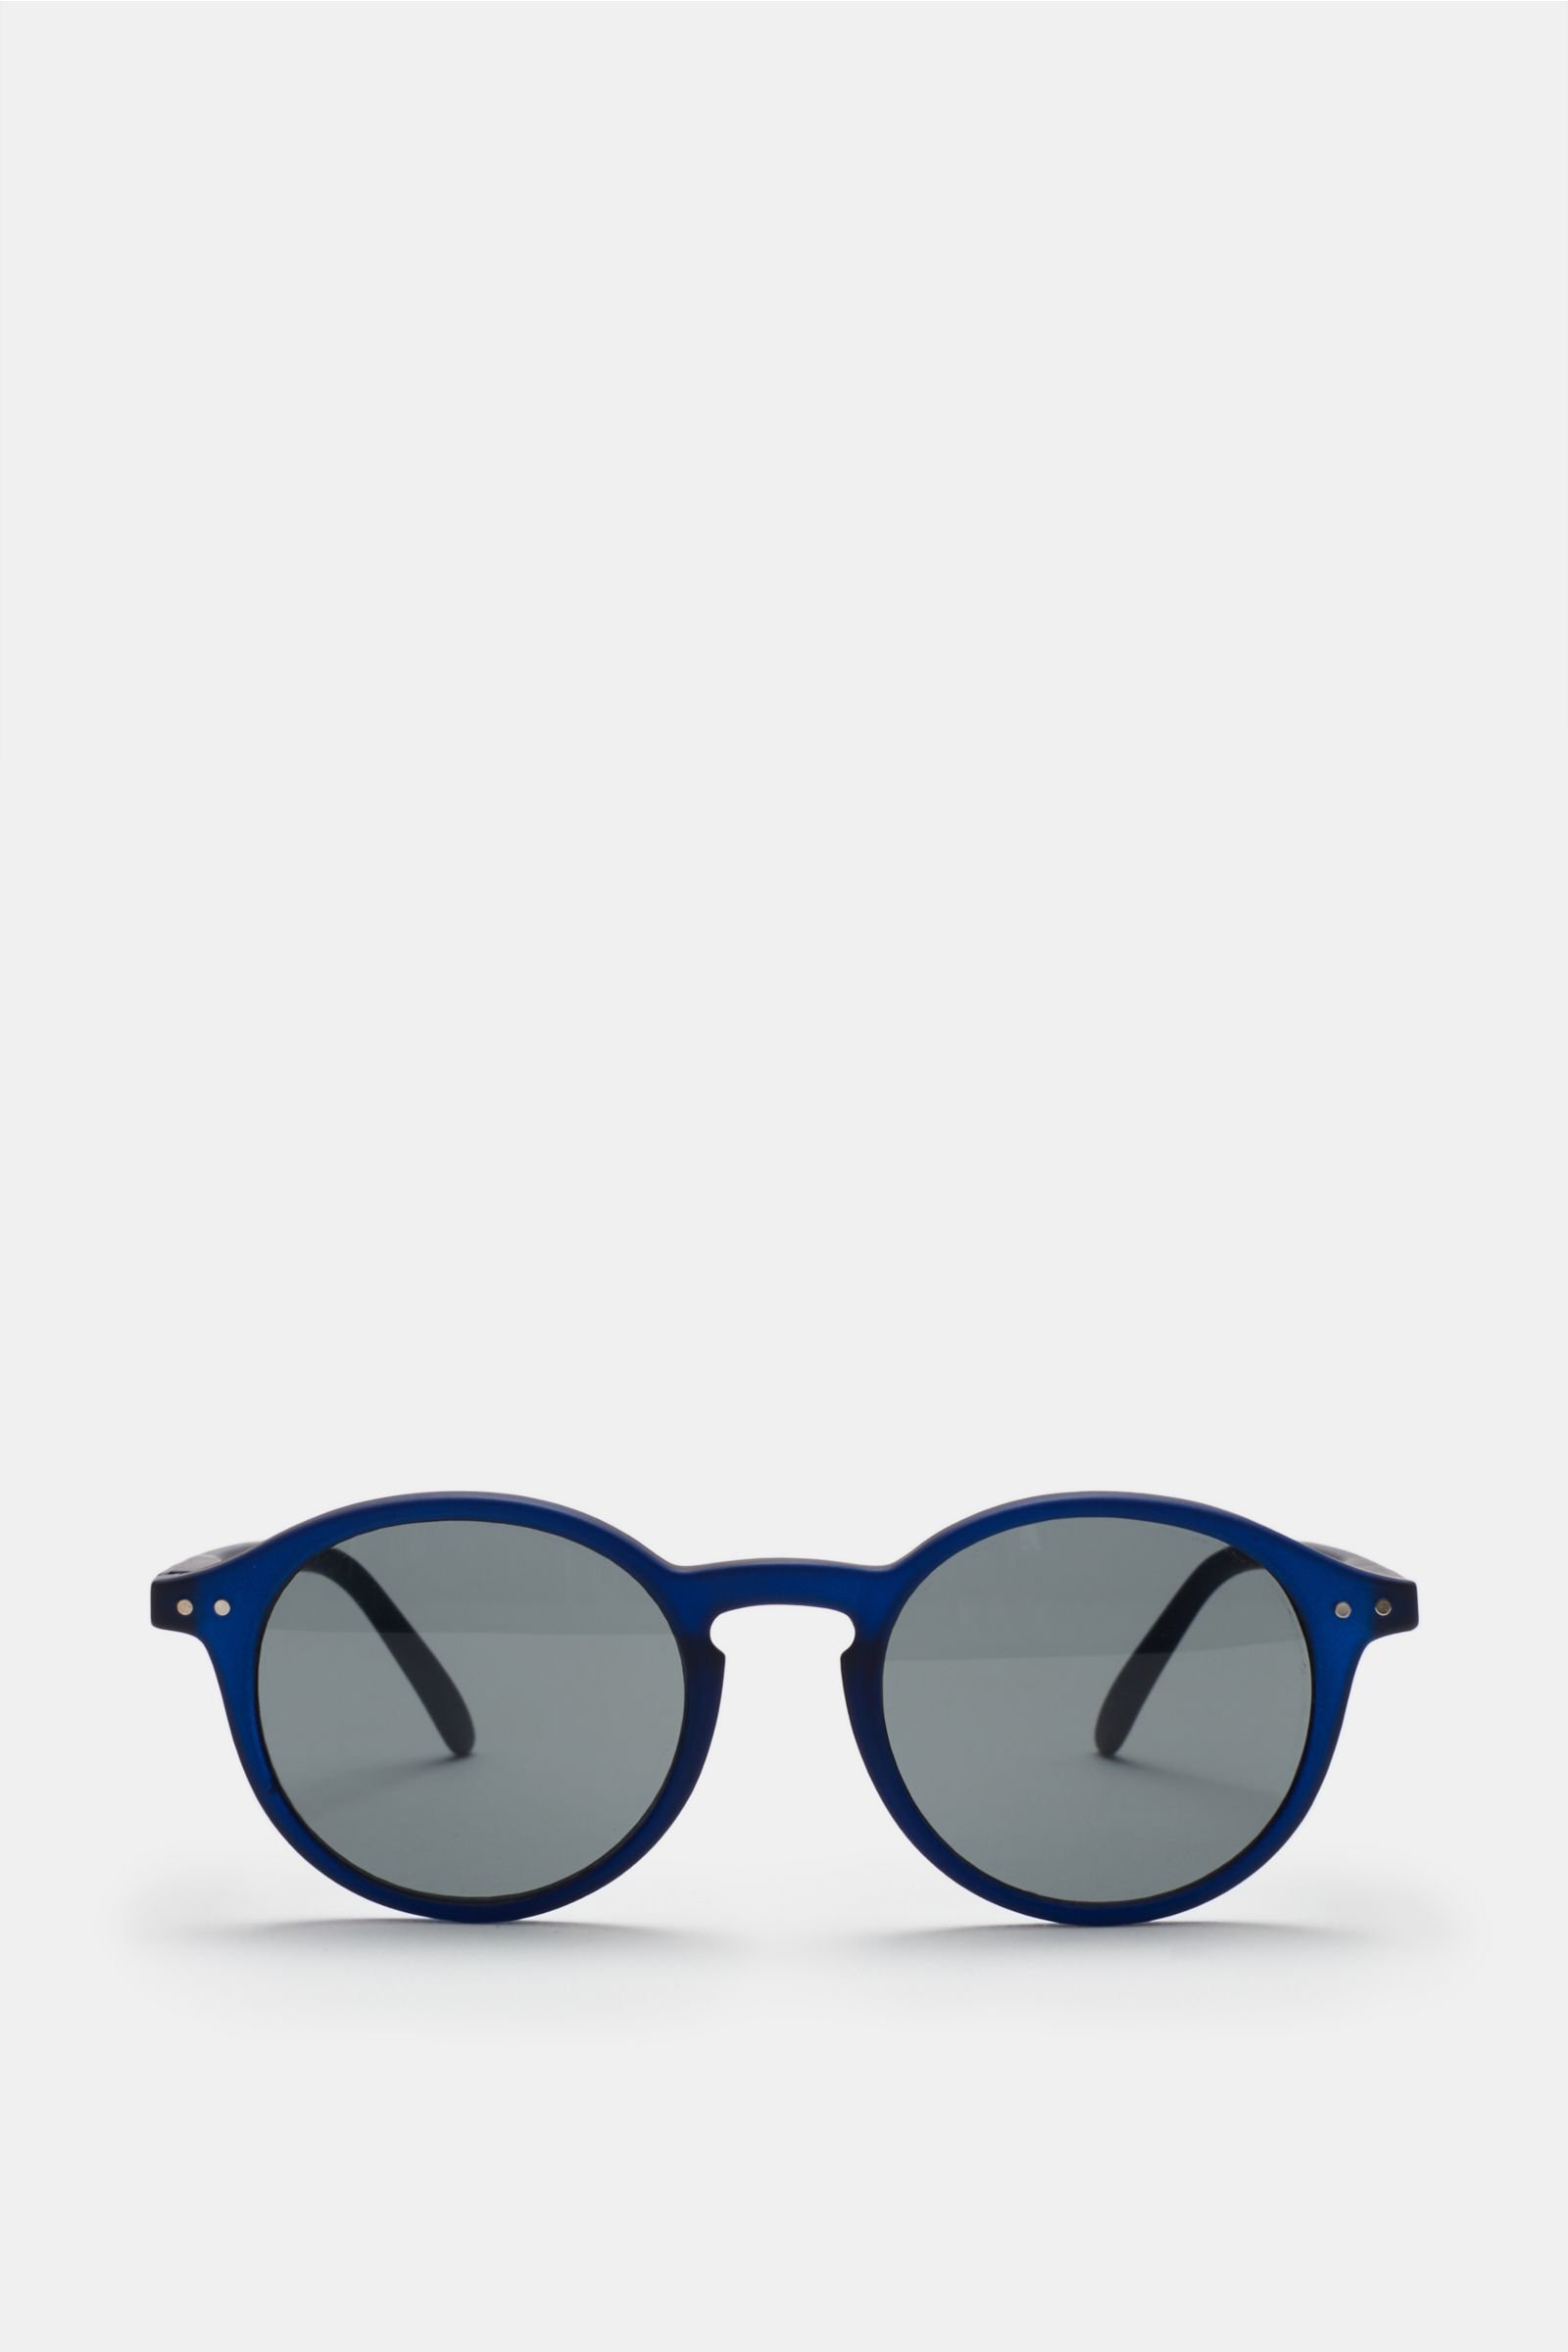 Sunglasses '#D Sun' navy/grey